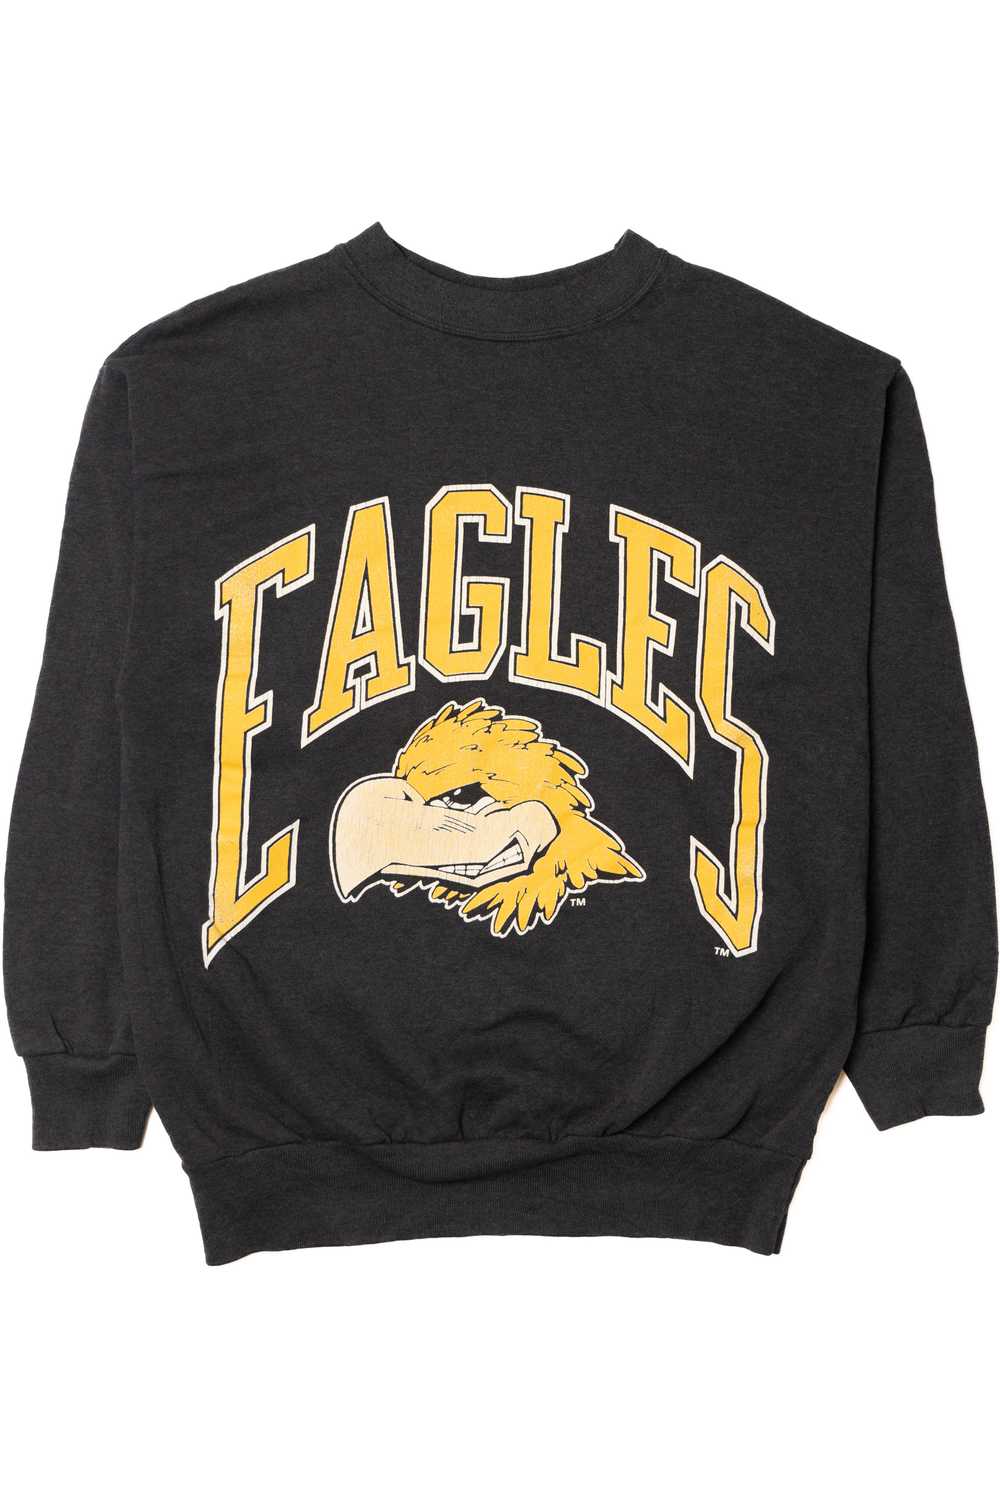 Vintage Eagles Mascot Signal Sport Sweatshirt - image 1